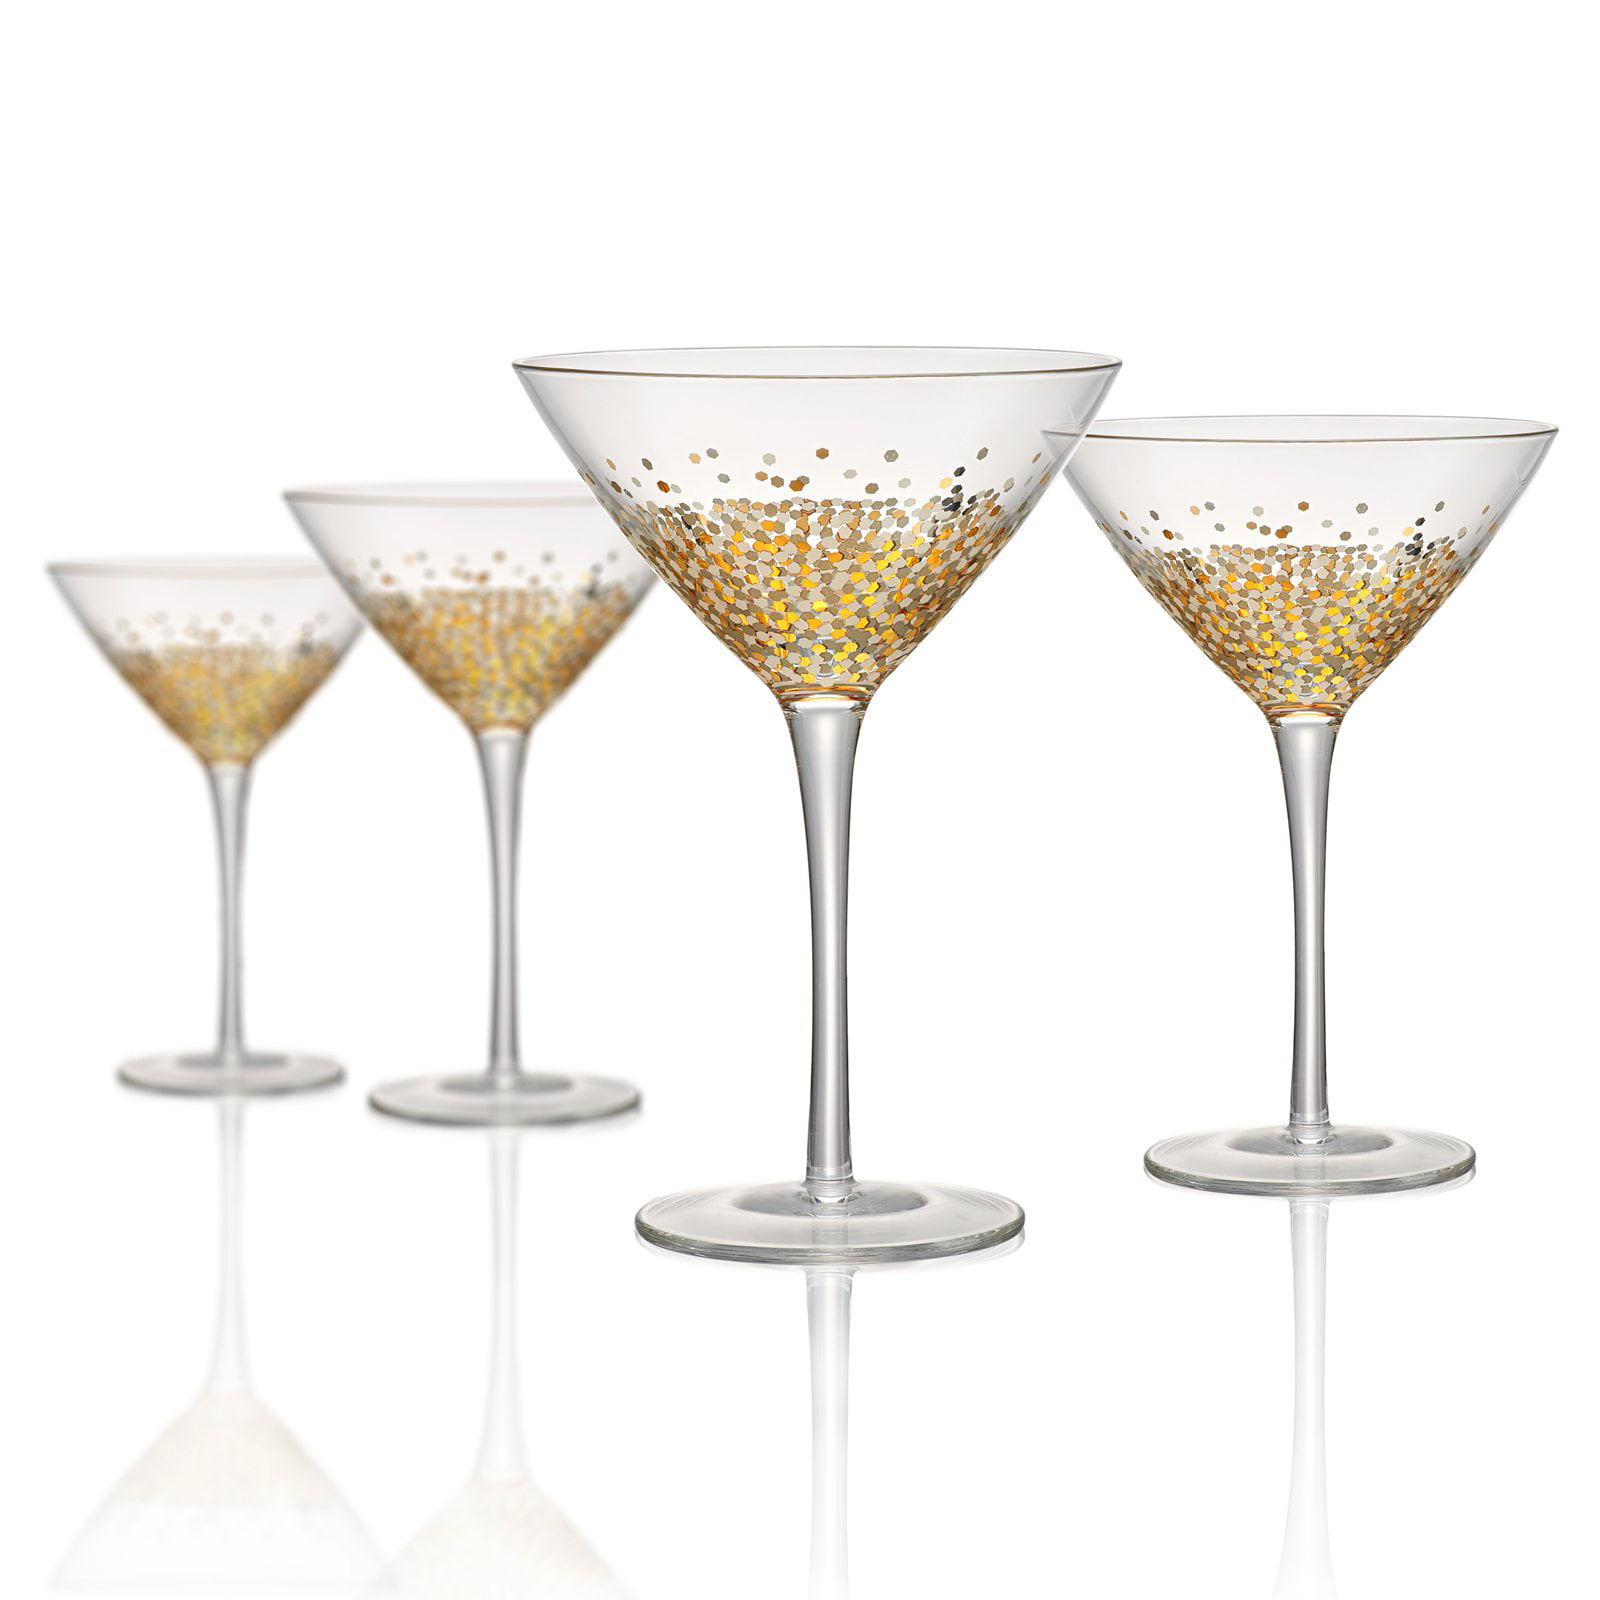 Artland Ambrosia Martini Glass Set of 4